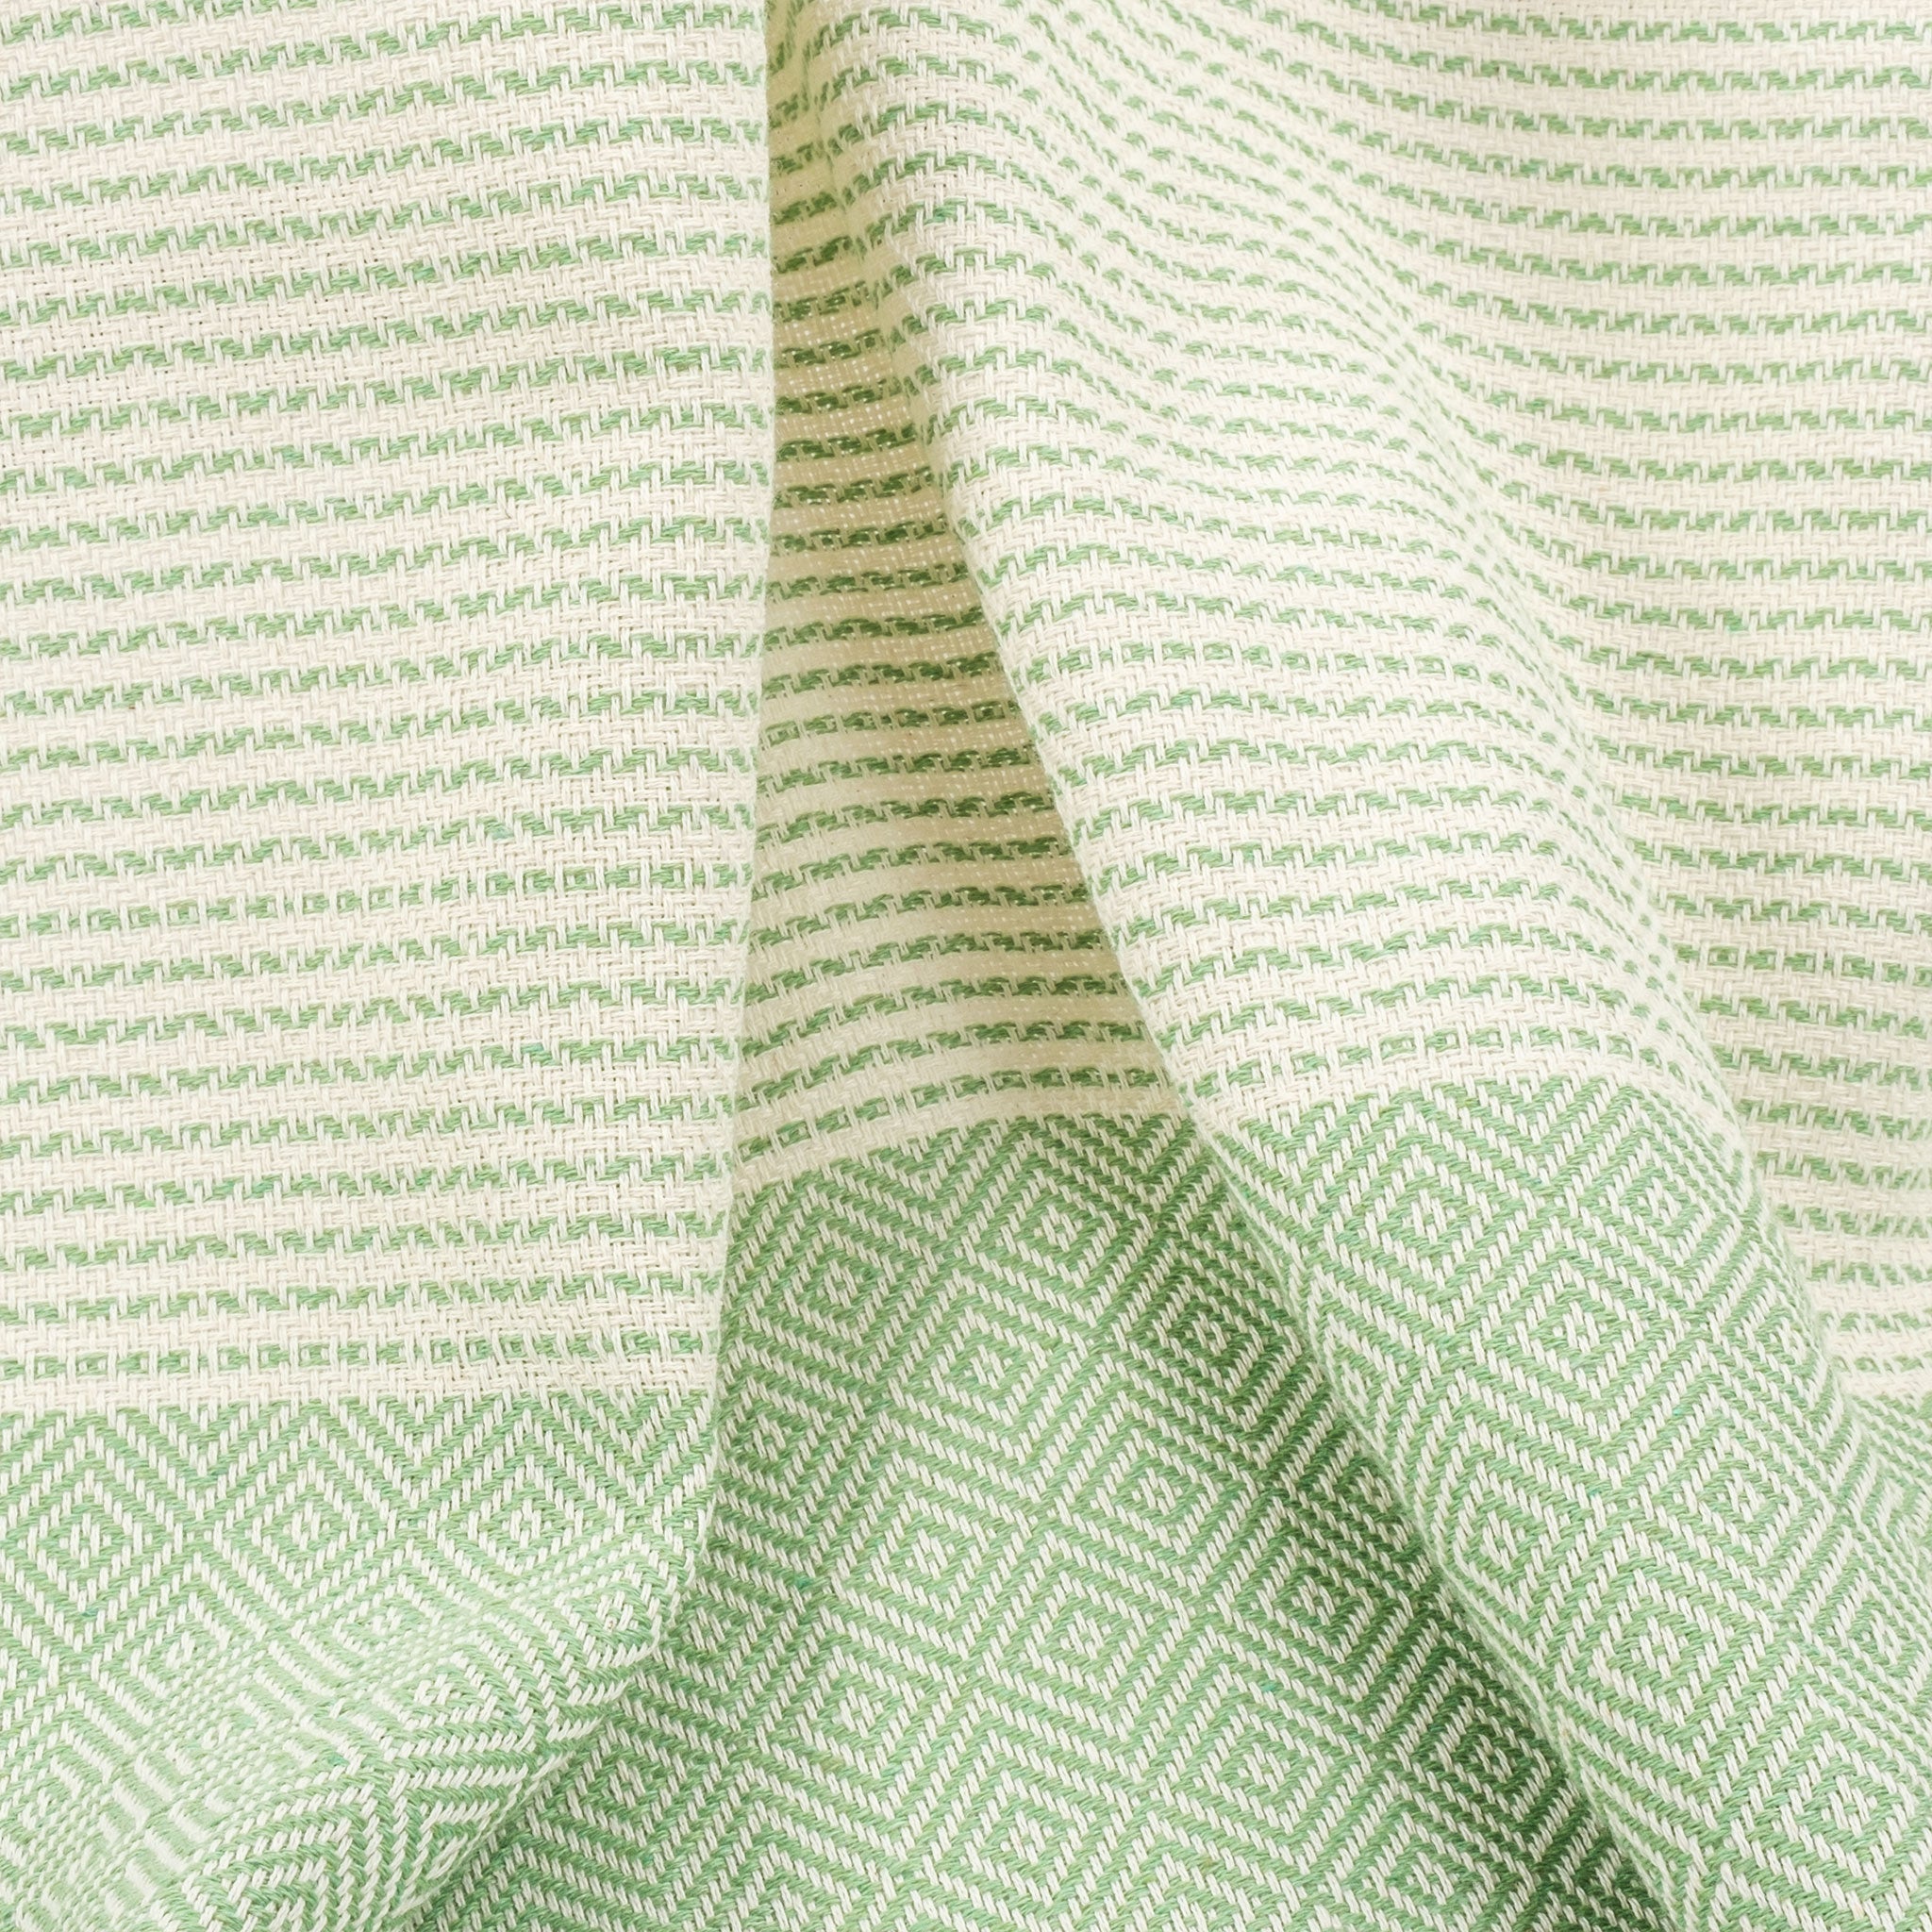 American Soft Linen - 100% Cotton Turkish Peshtemal Towels 40x70 Inches - Green - 2